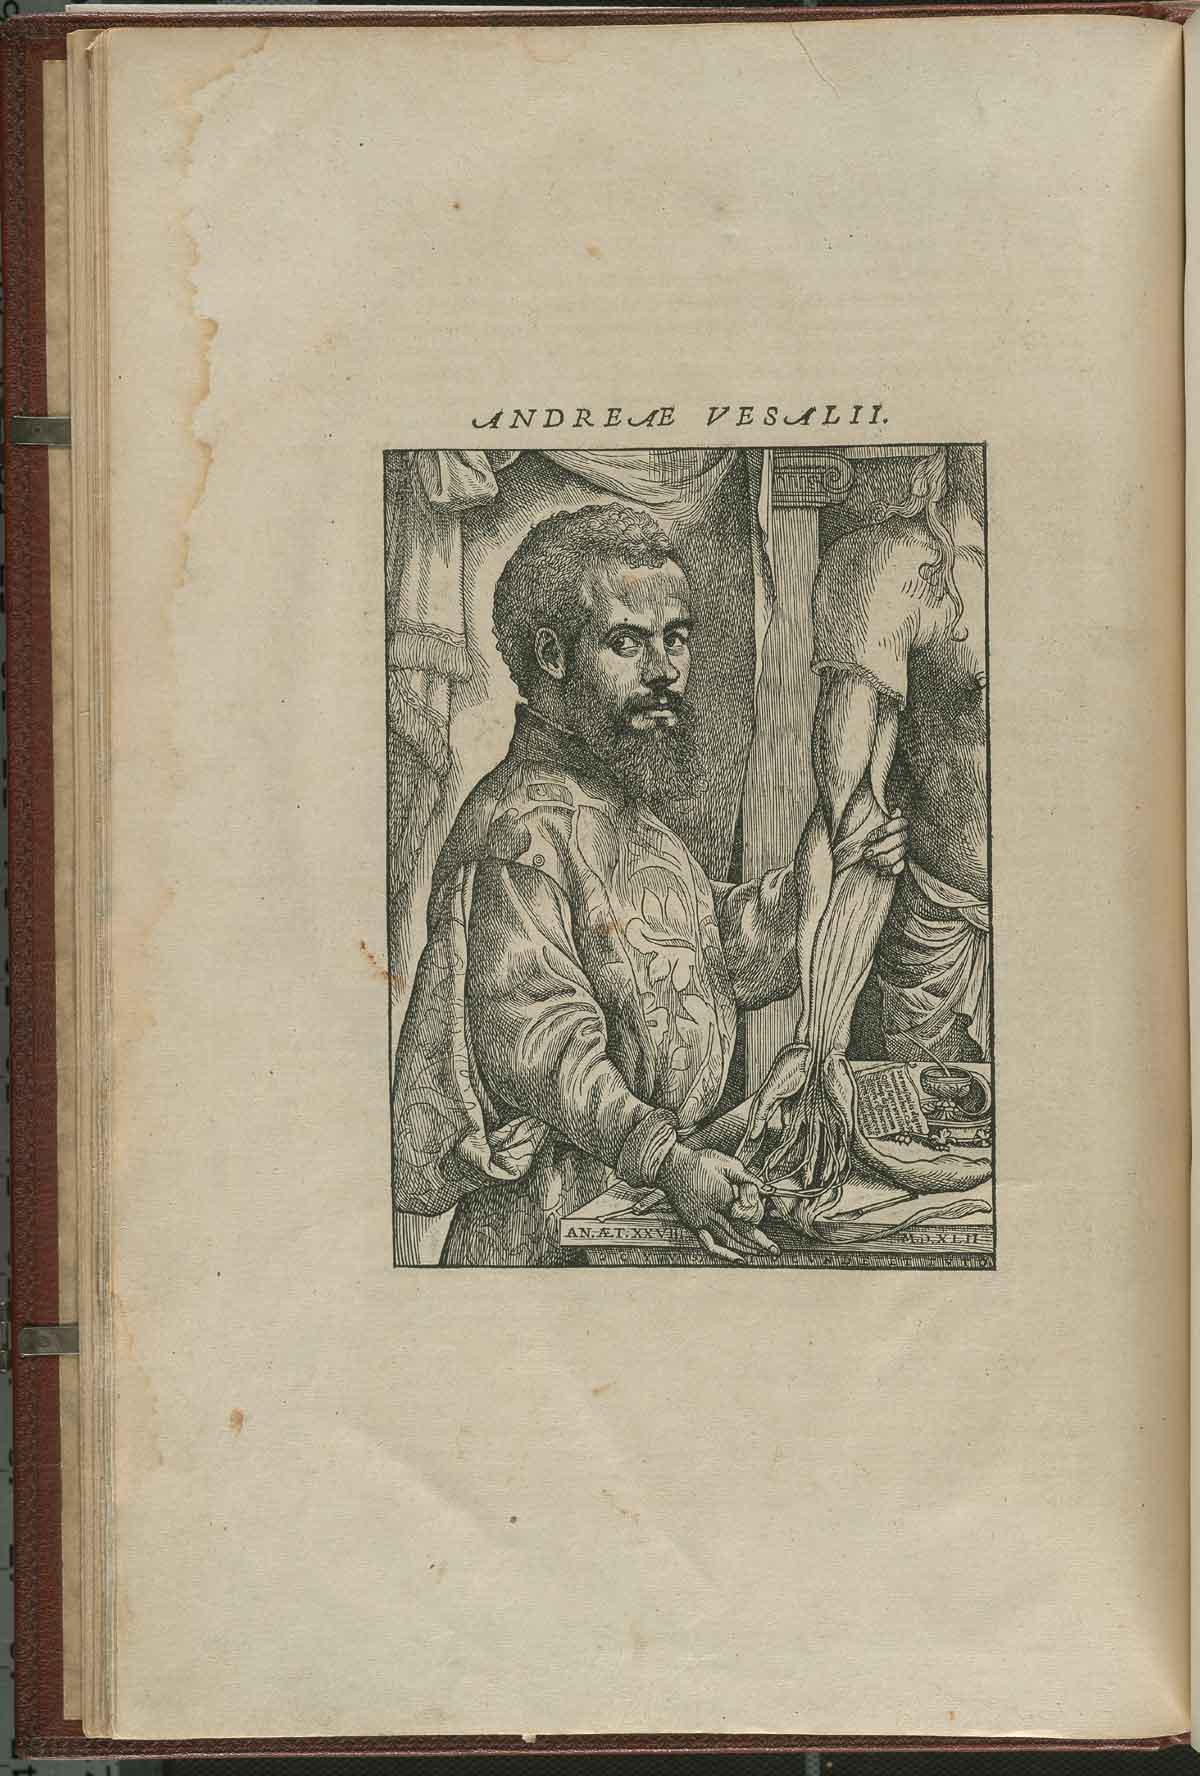 Portrait of Andreas Vesalius' De corporis humani fabrica libri septem, featuring Vesalius standing right pose, face towards front holding the arm of a dissected corpse.